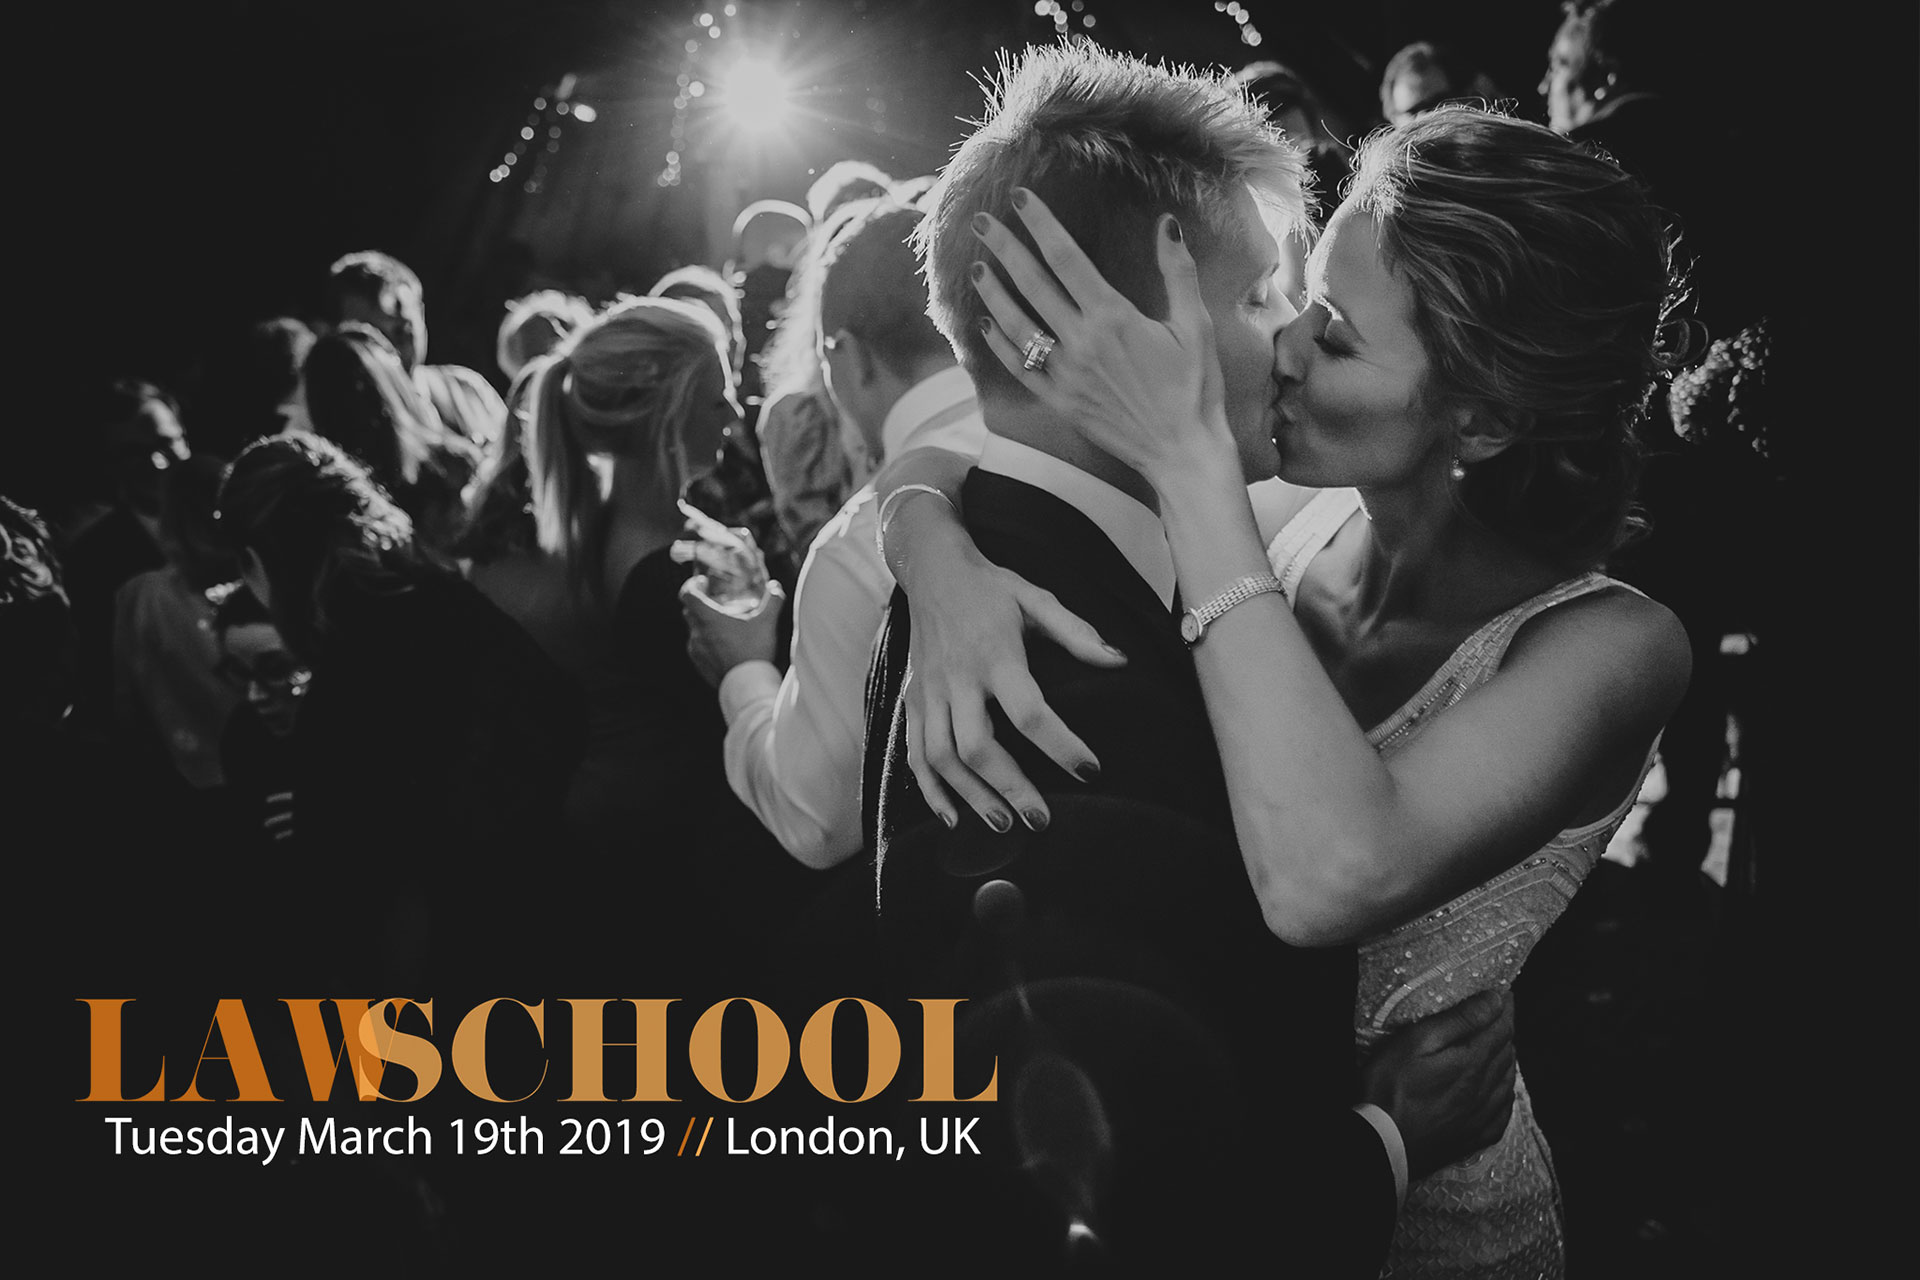 Law School / Wedding Photography Workshop / March 19th 2019 / London, UK